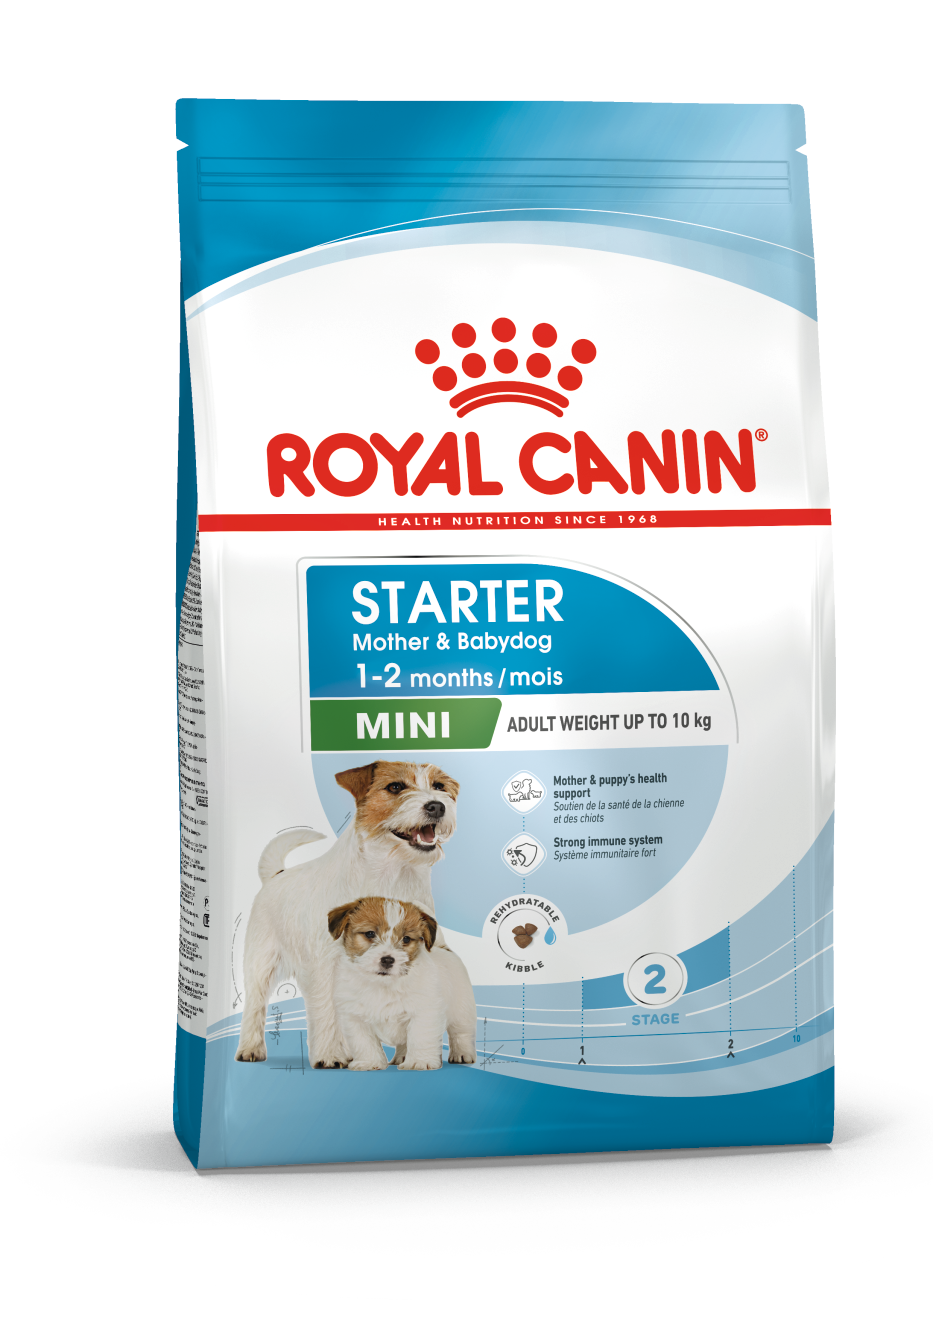 Royal Canin Starter Mini Dog Food 8kg